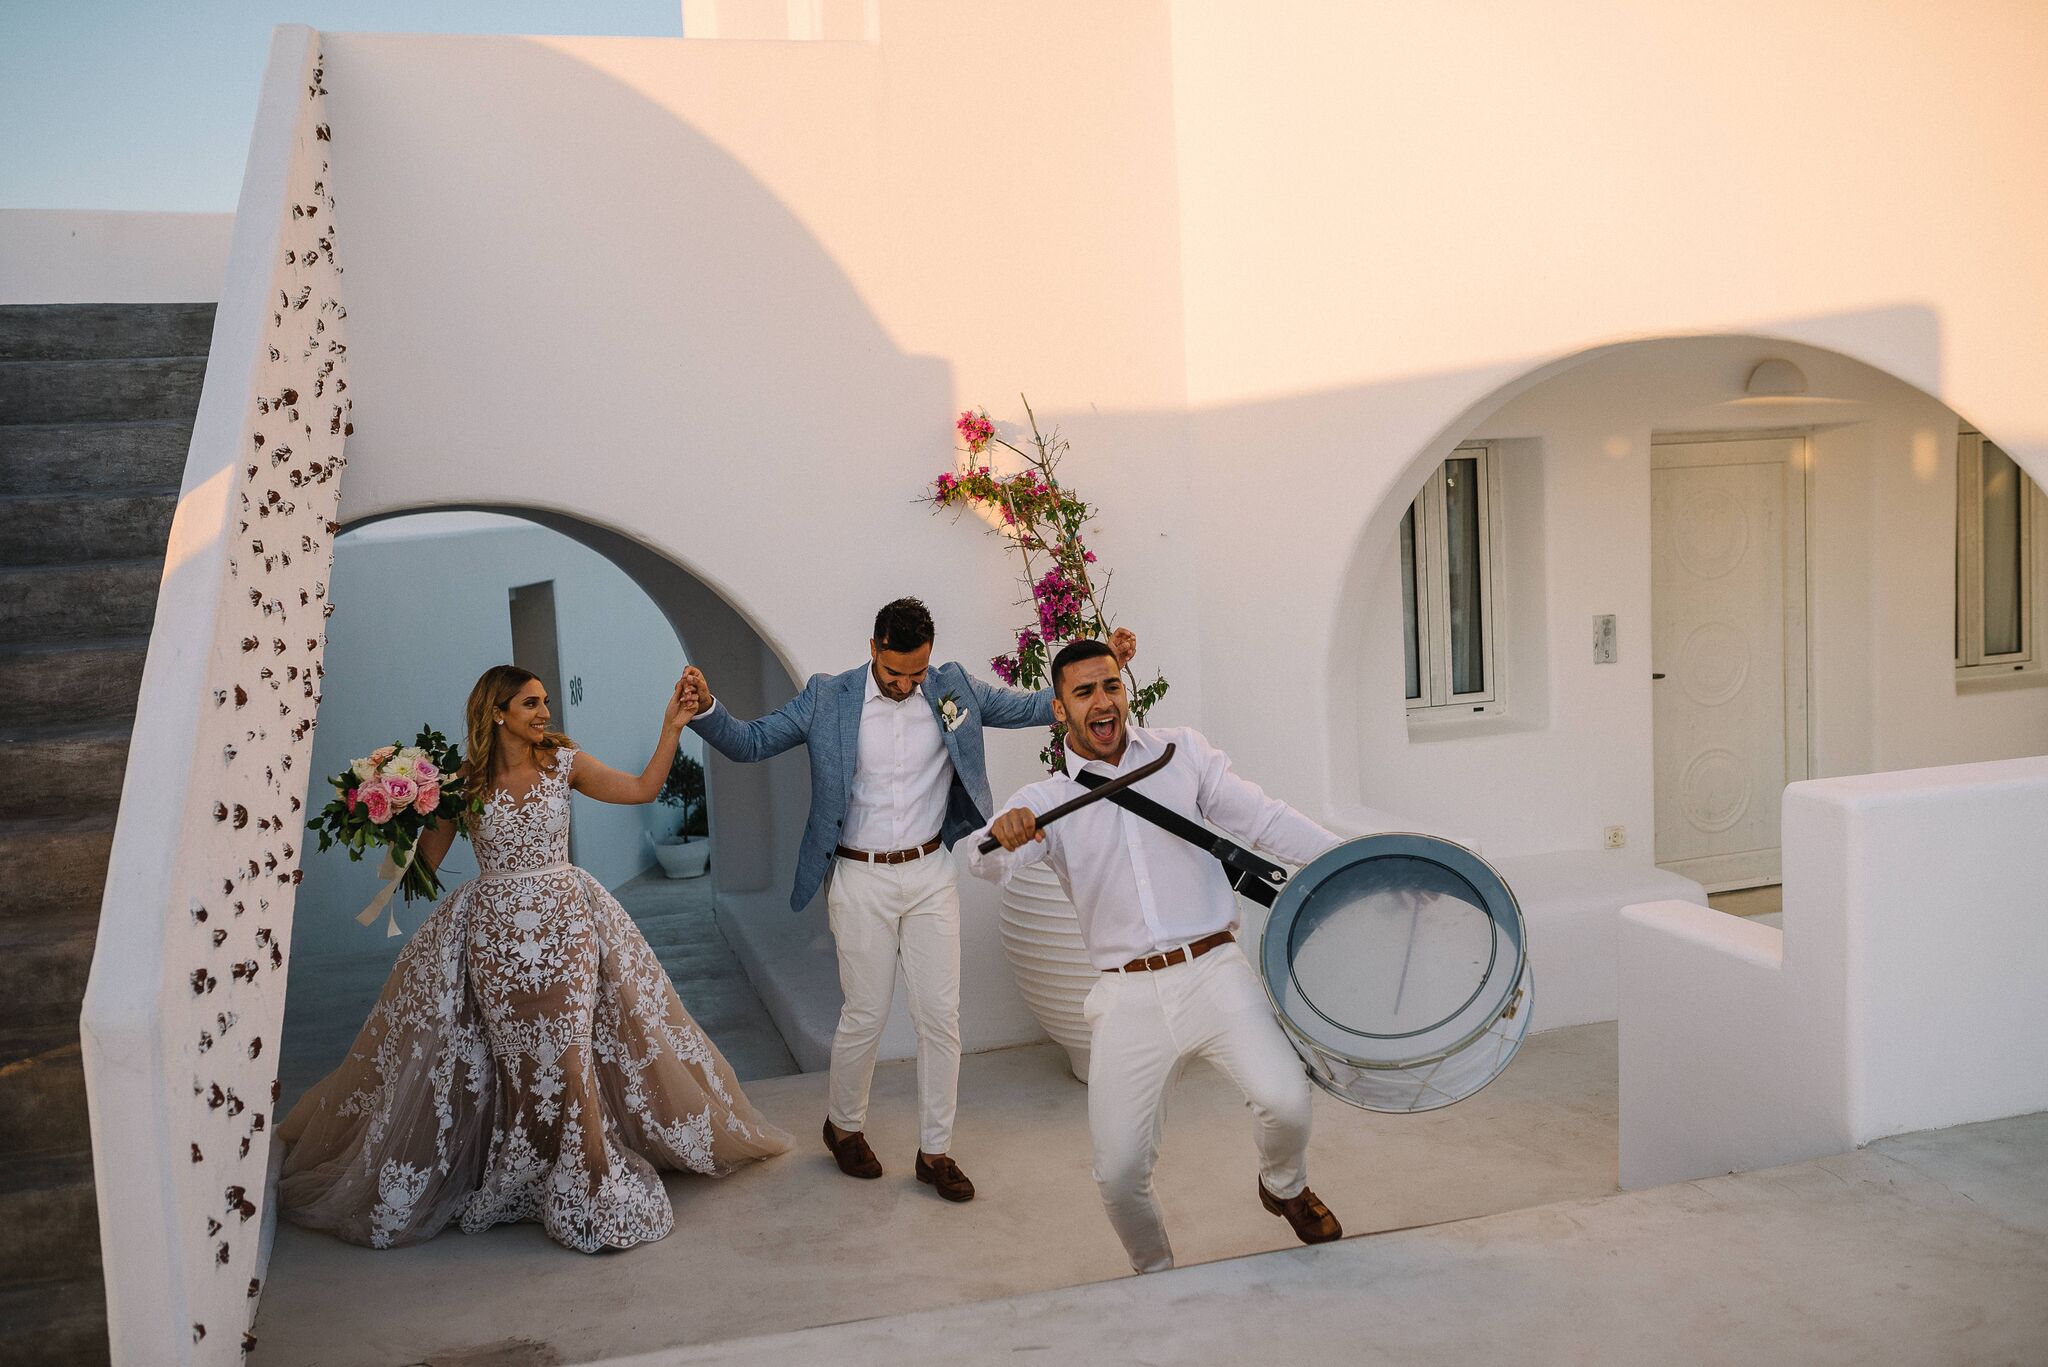 An All-White Wedding Set Against The Santorini Sunset - Wedded Wonderland